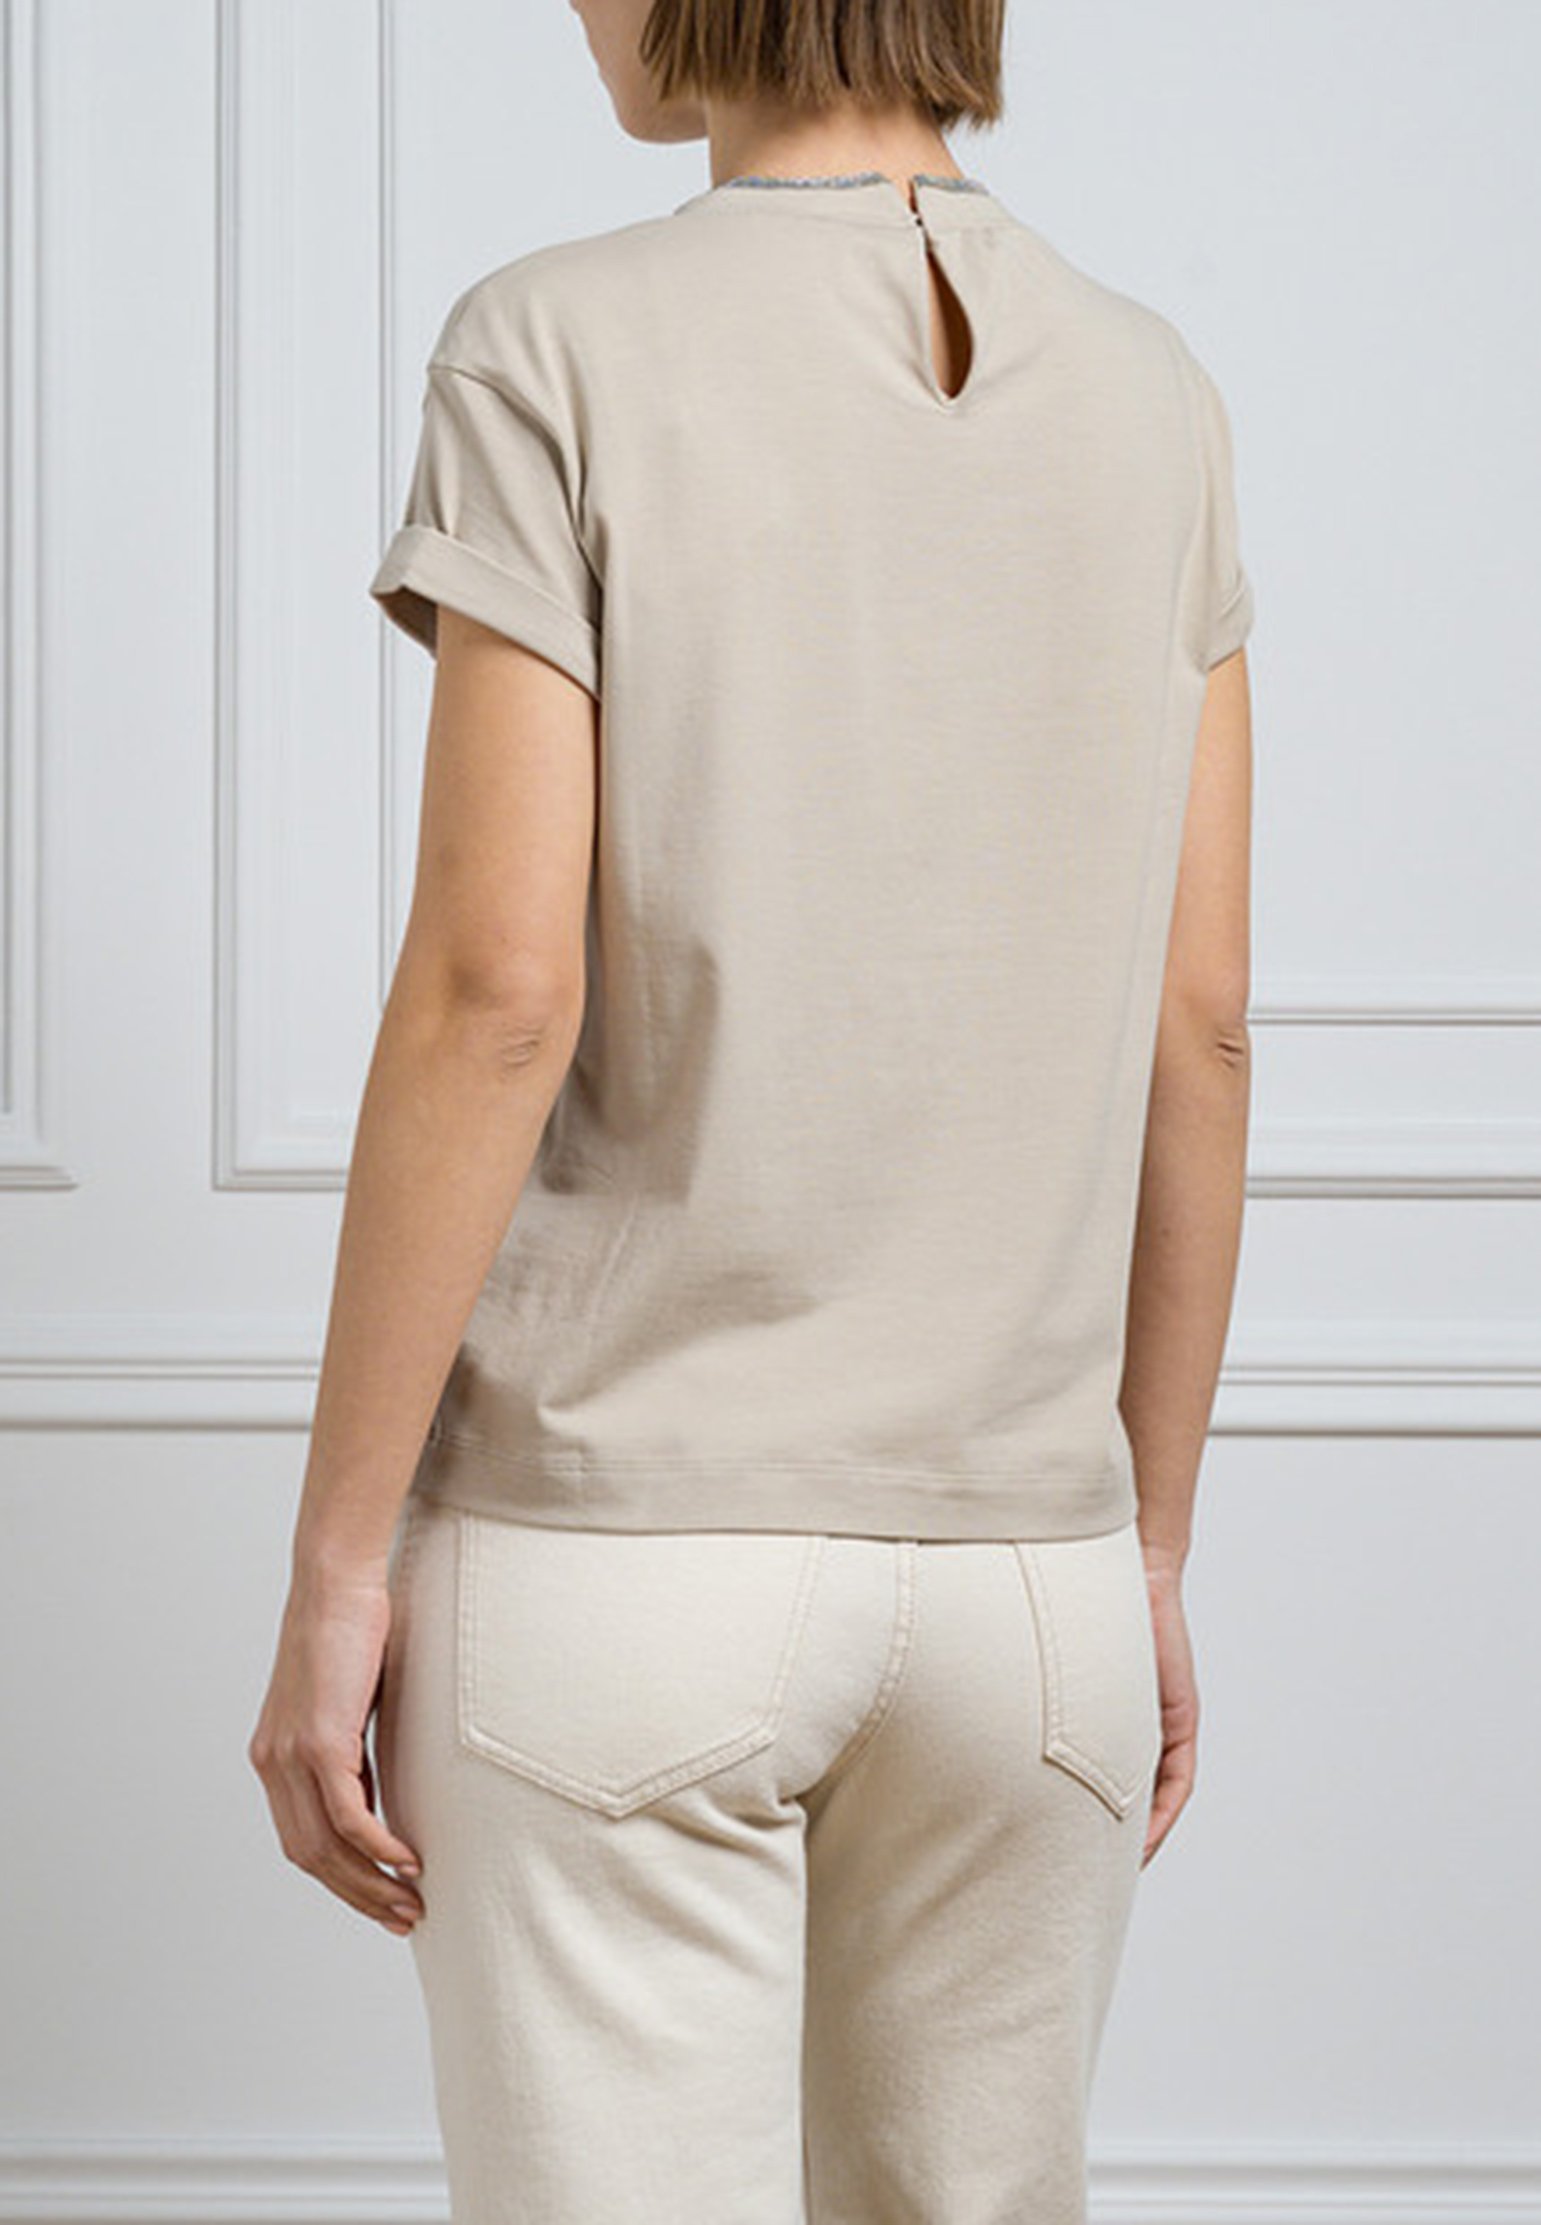 T-Shirt BRUNELLO CUCINELLI Color: beige (Code: 1198) in online store Allure